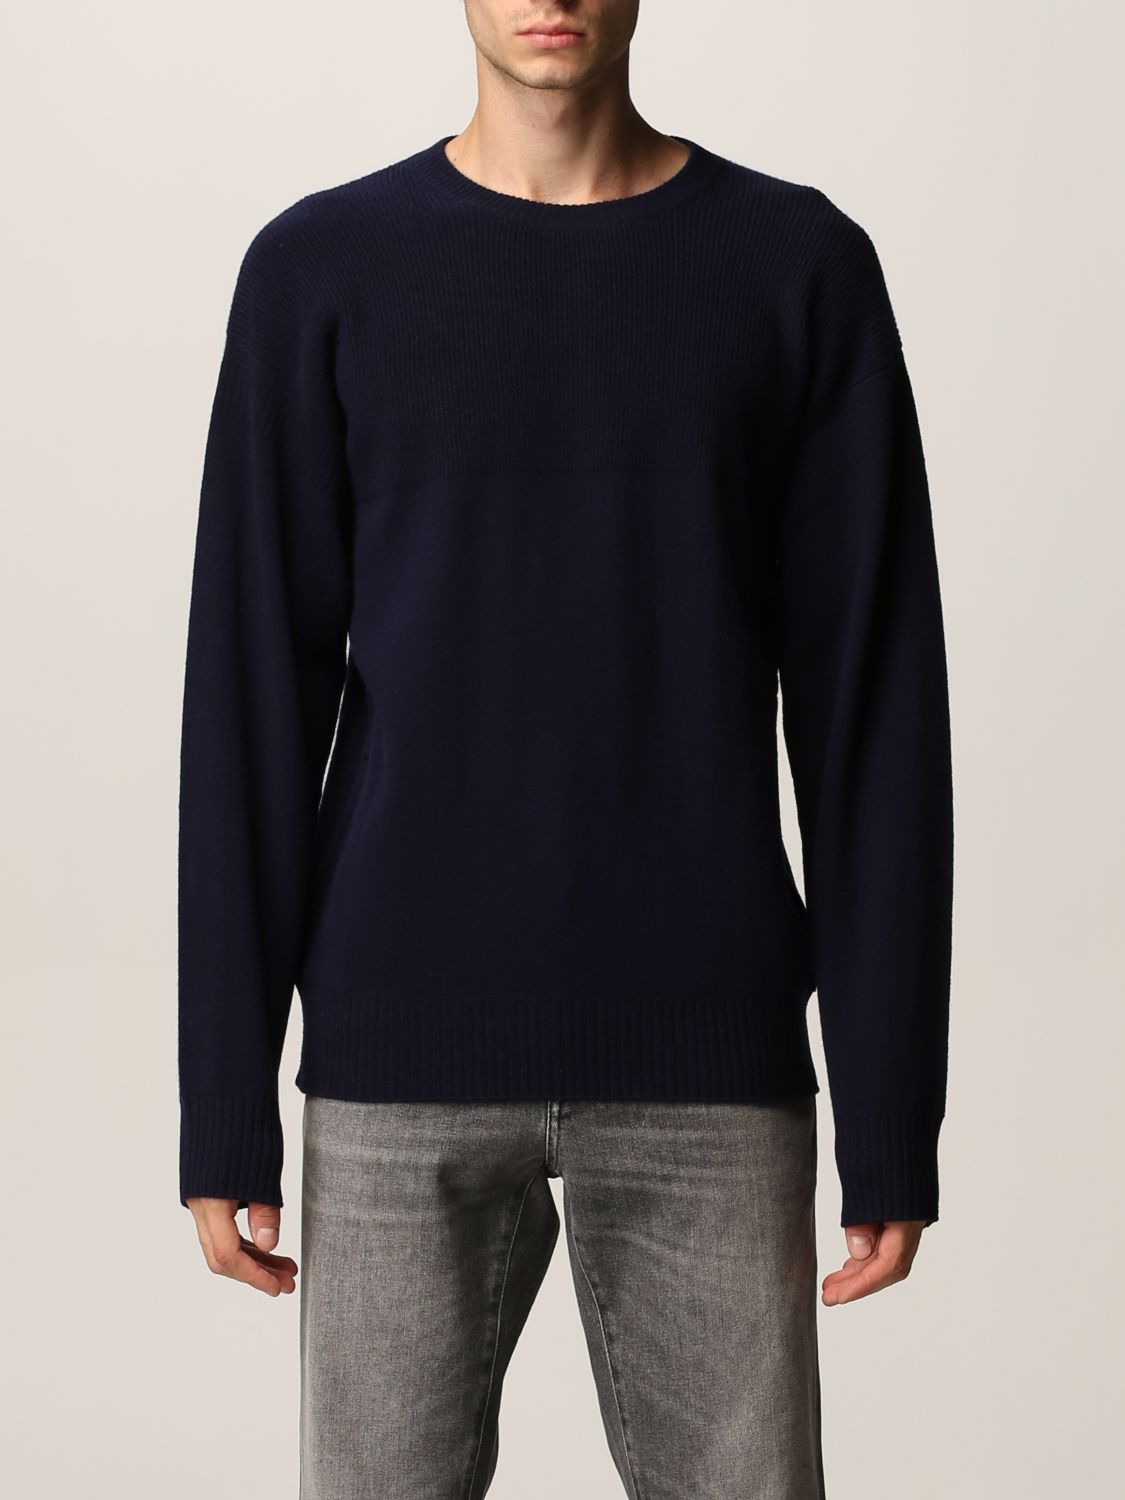 Z ZEGNA: sweater for man - Blue | Z Zegna sweater ZZ110 VYH12 online on ...